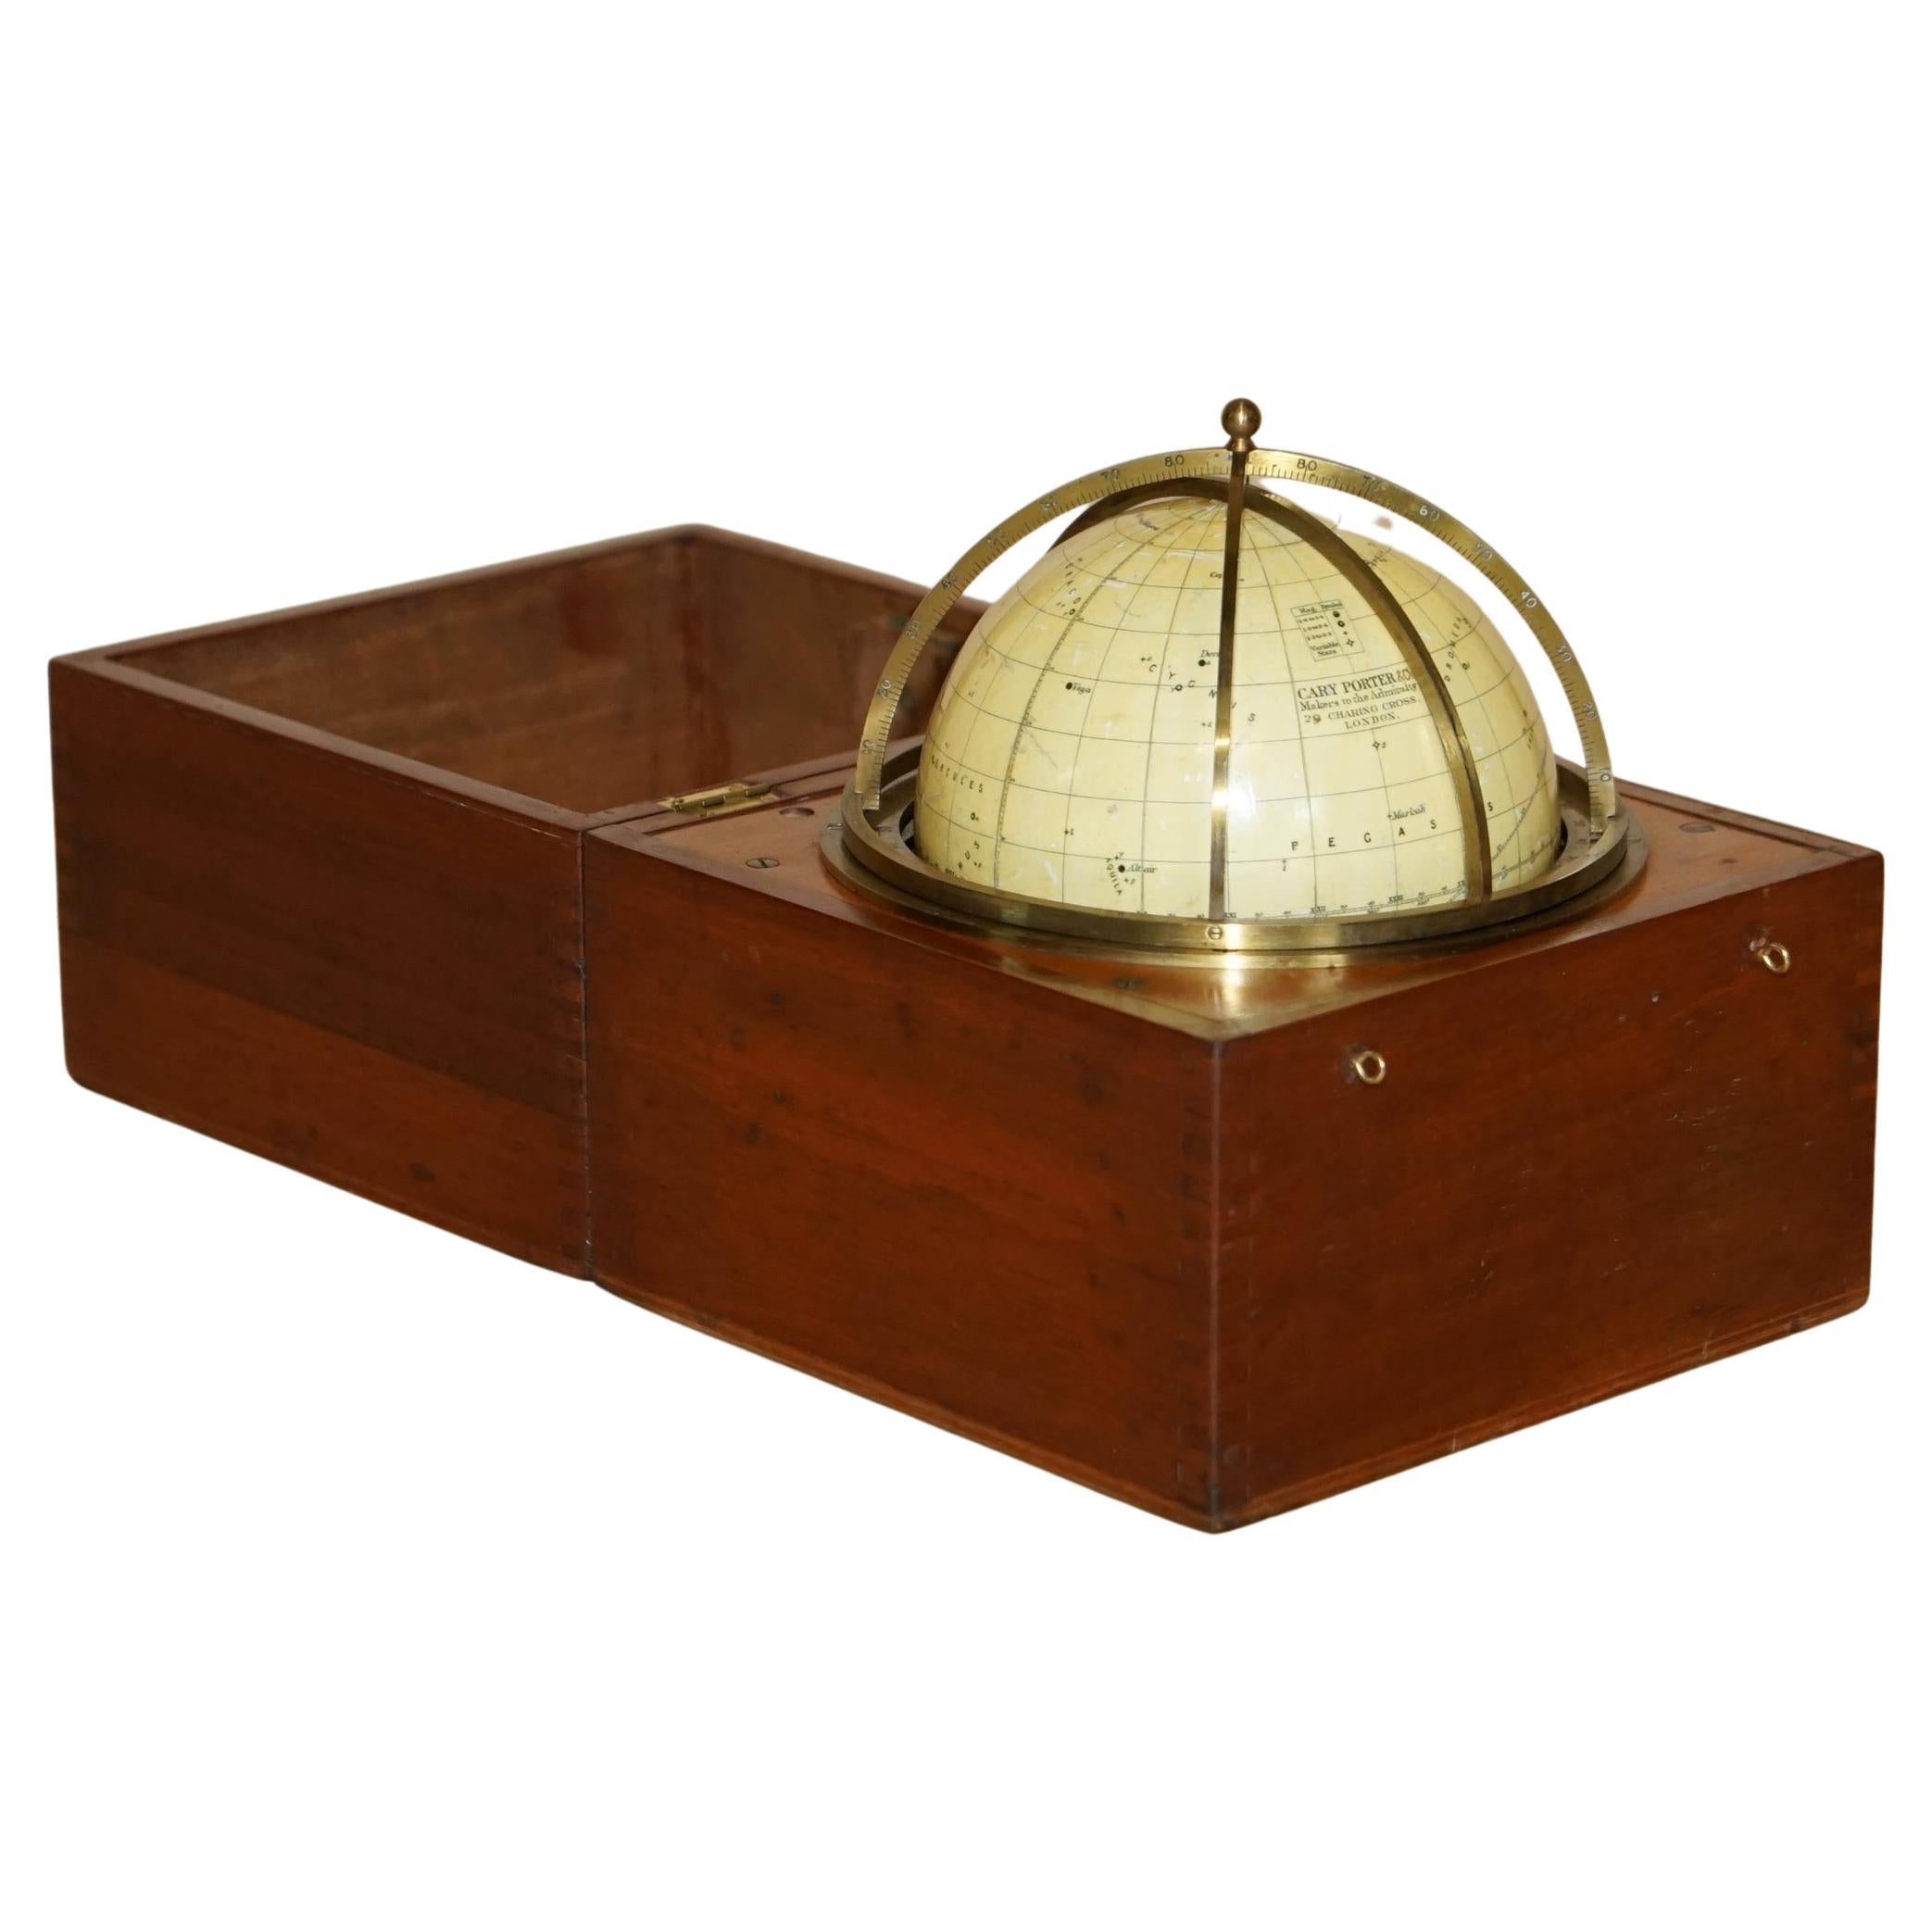 John Cary Reise Celestial Globe in Box, markiert Cary & Co London, Nr. 21540